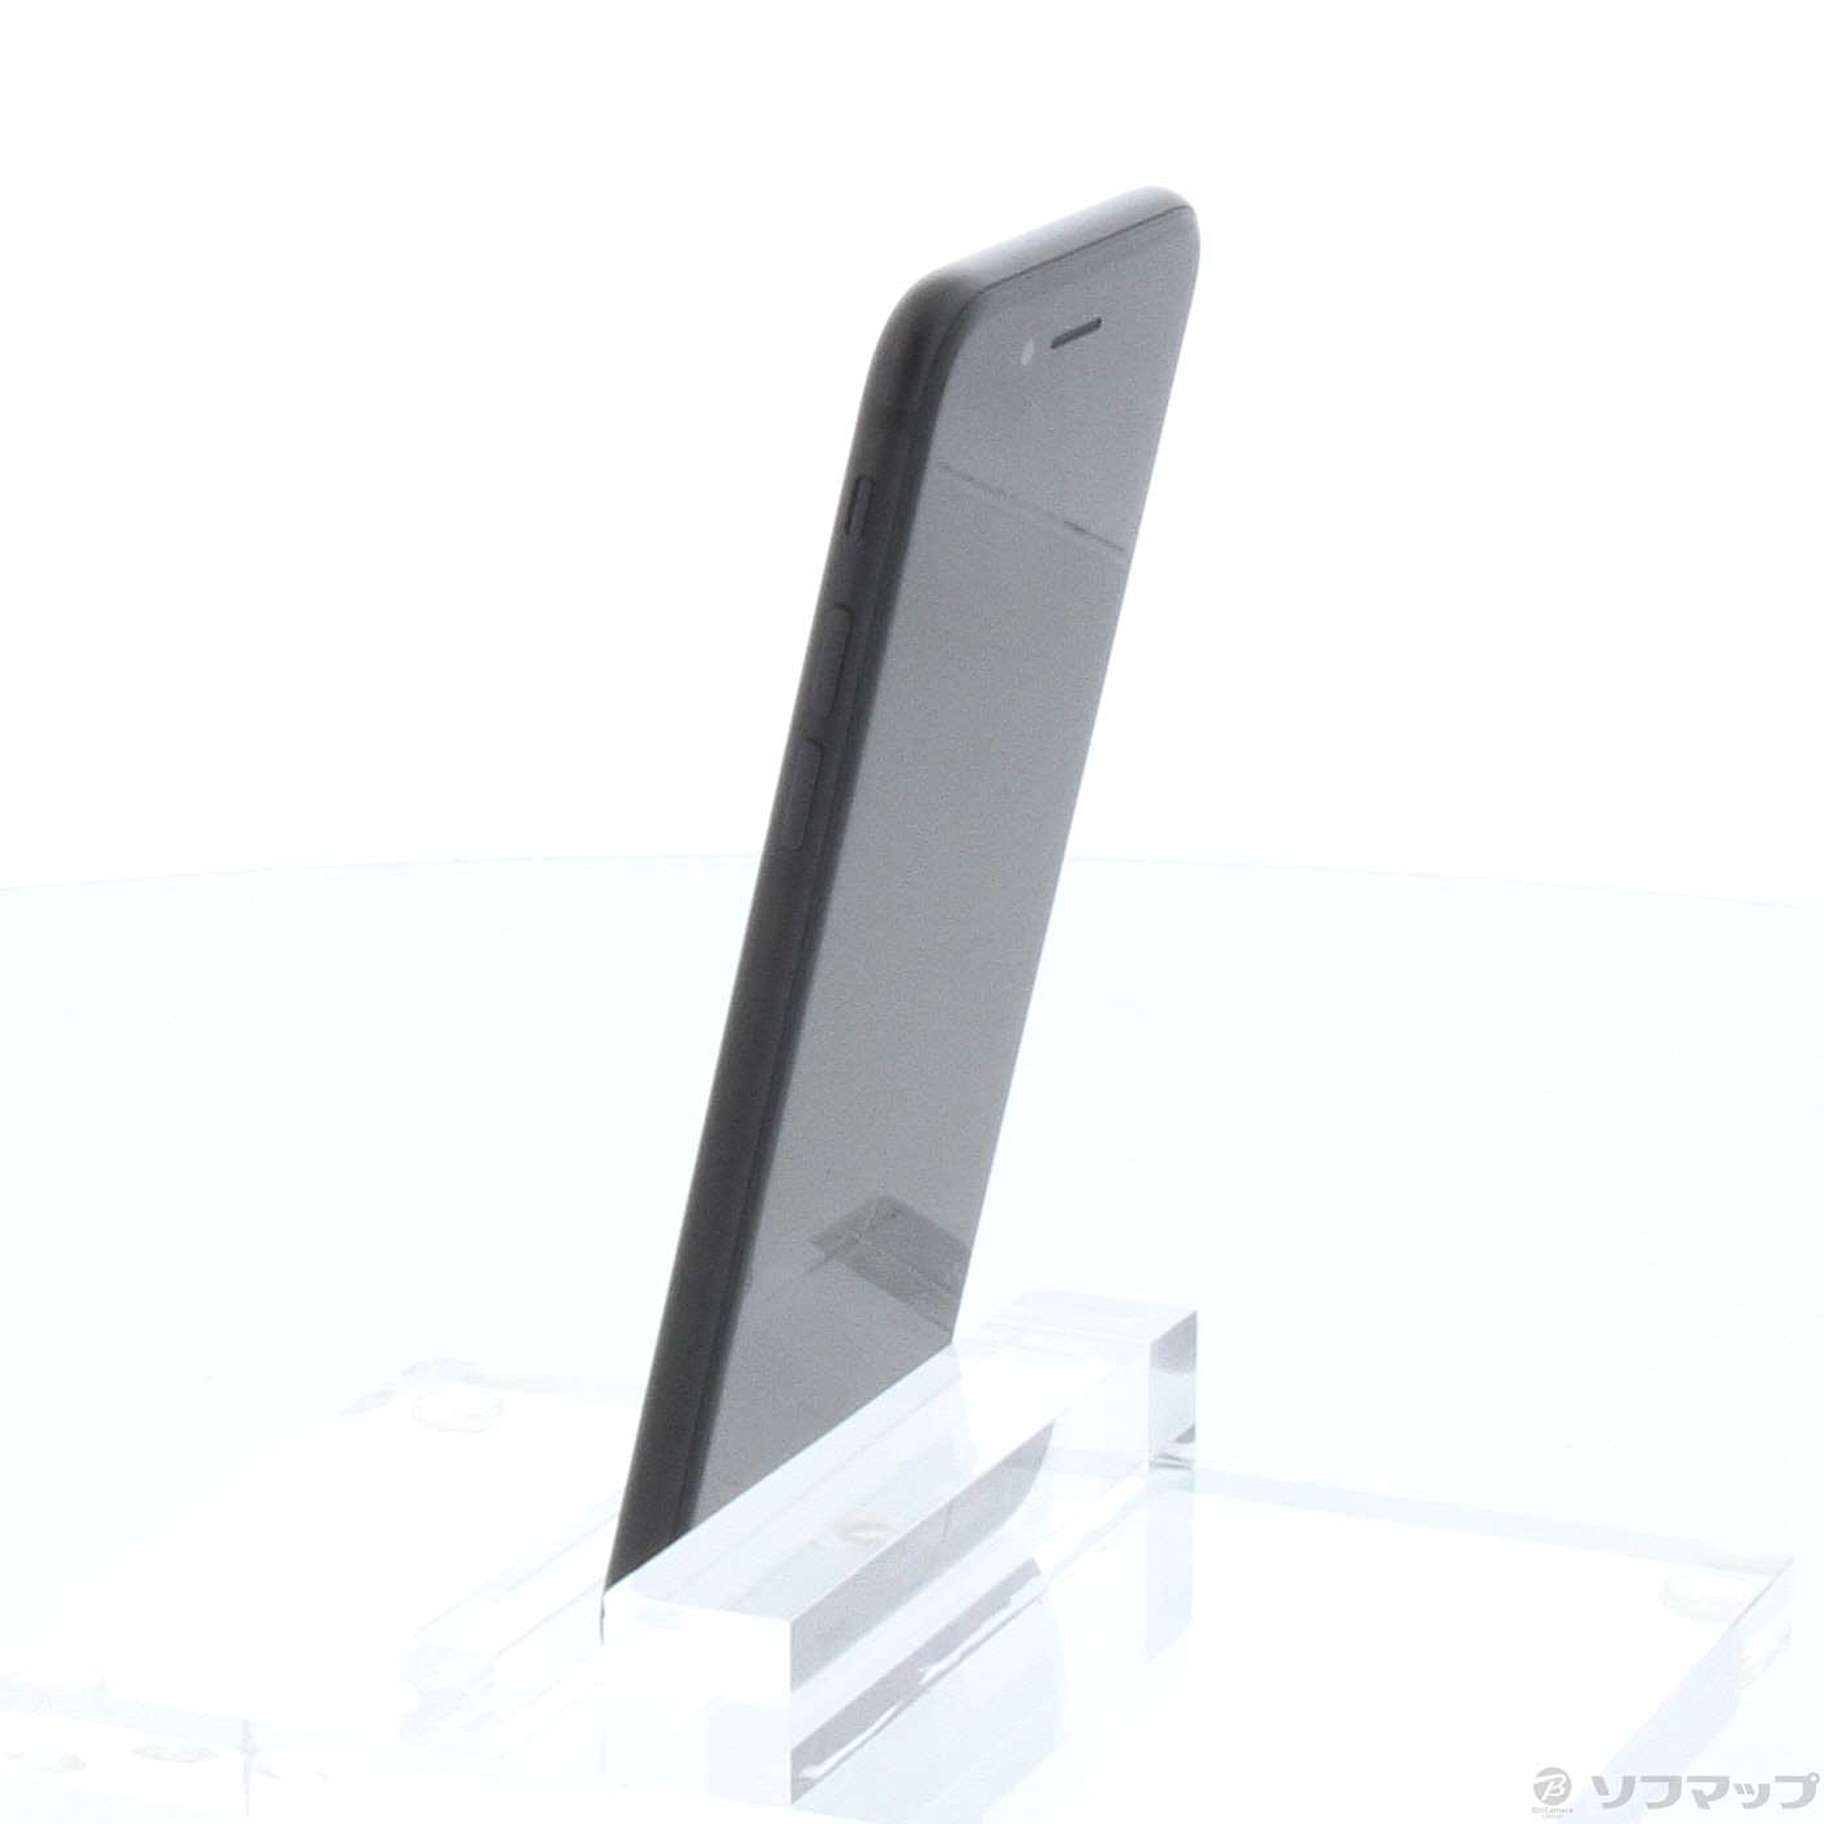 iPhone7 256GB ブラック MNCQ2J／A SoftBank